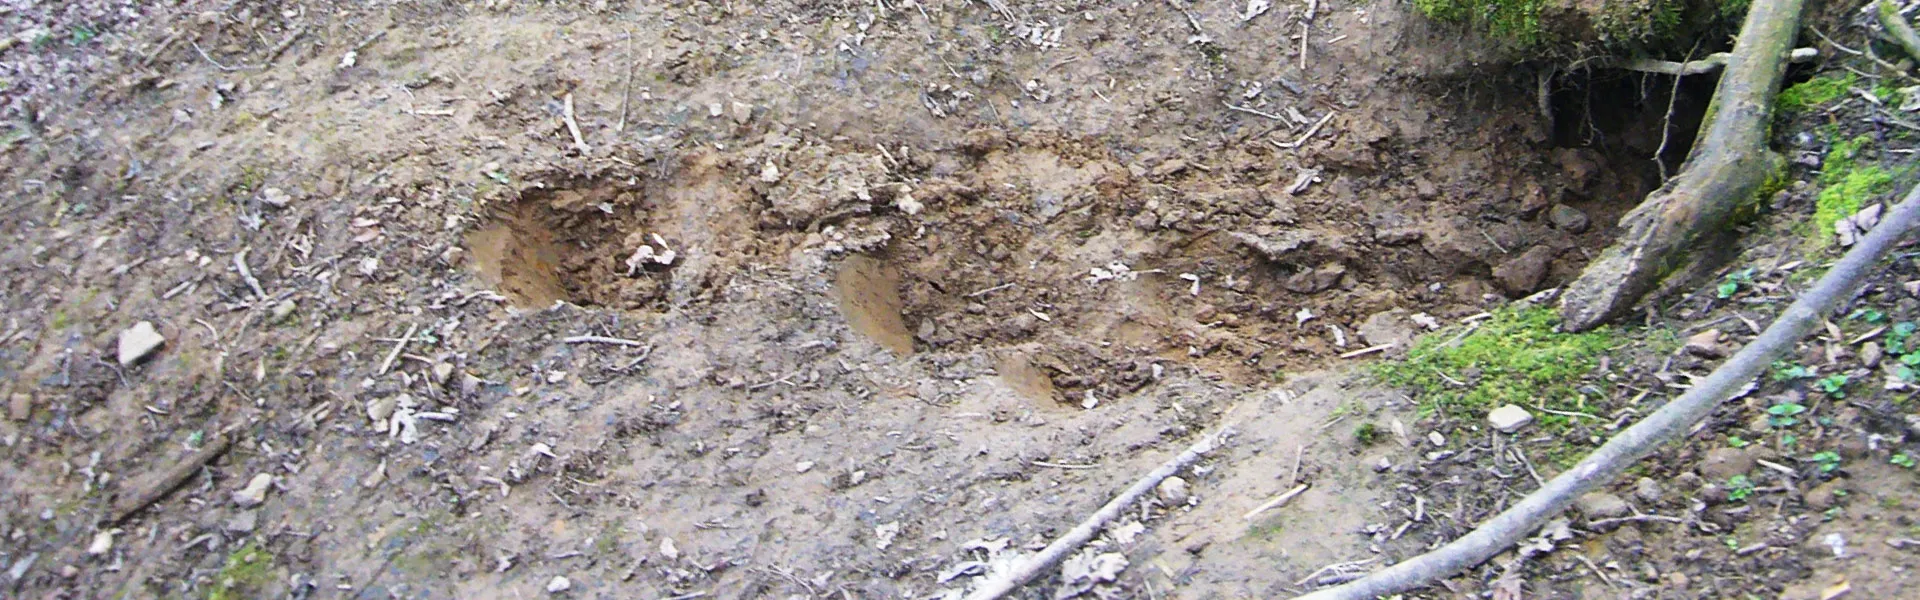 Terrierwork - Blocked badger sett entrance with spade marks